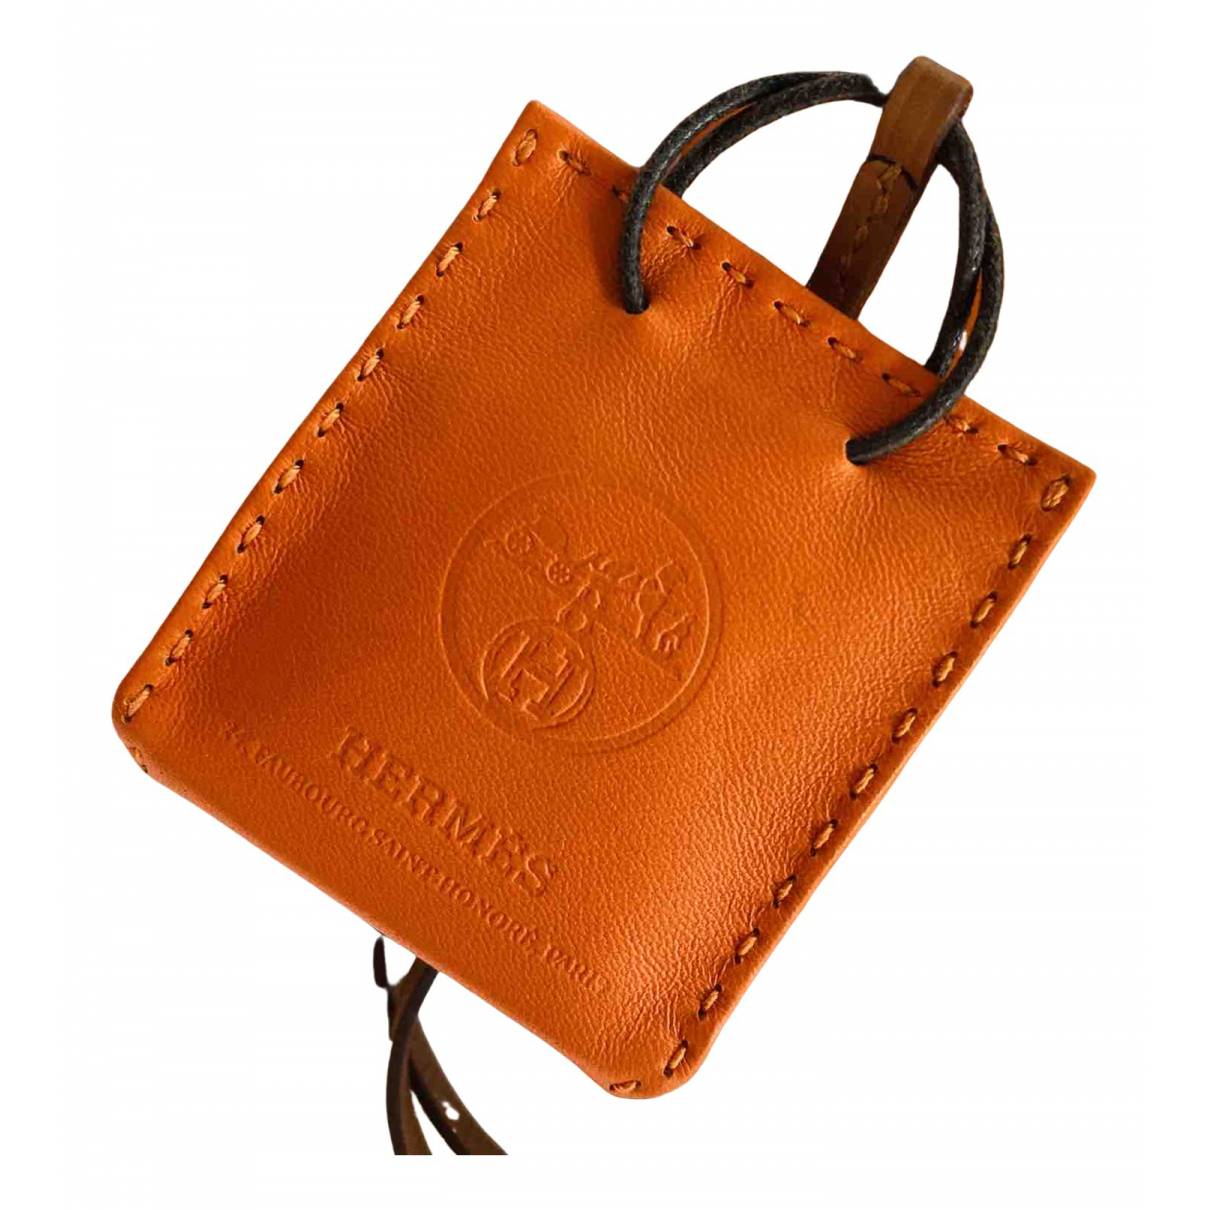 Shopping bag charm leather bag charm Hermès Orange in Leather